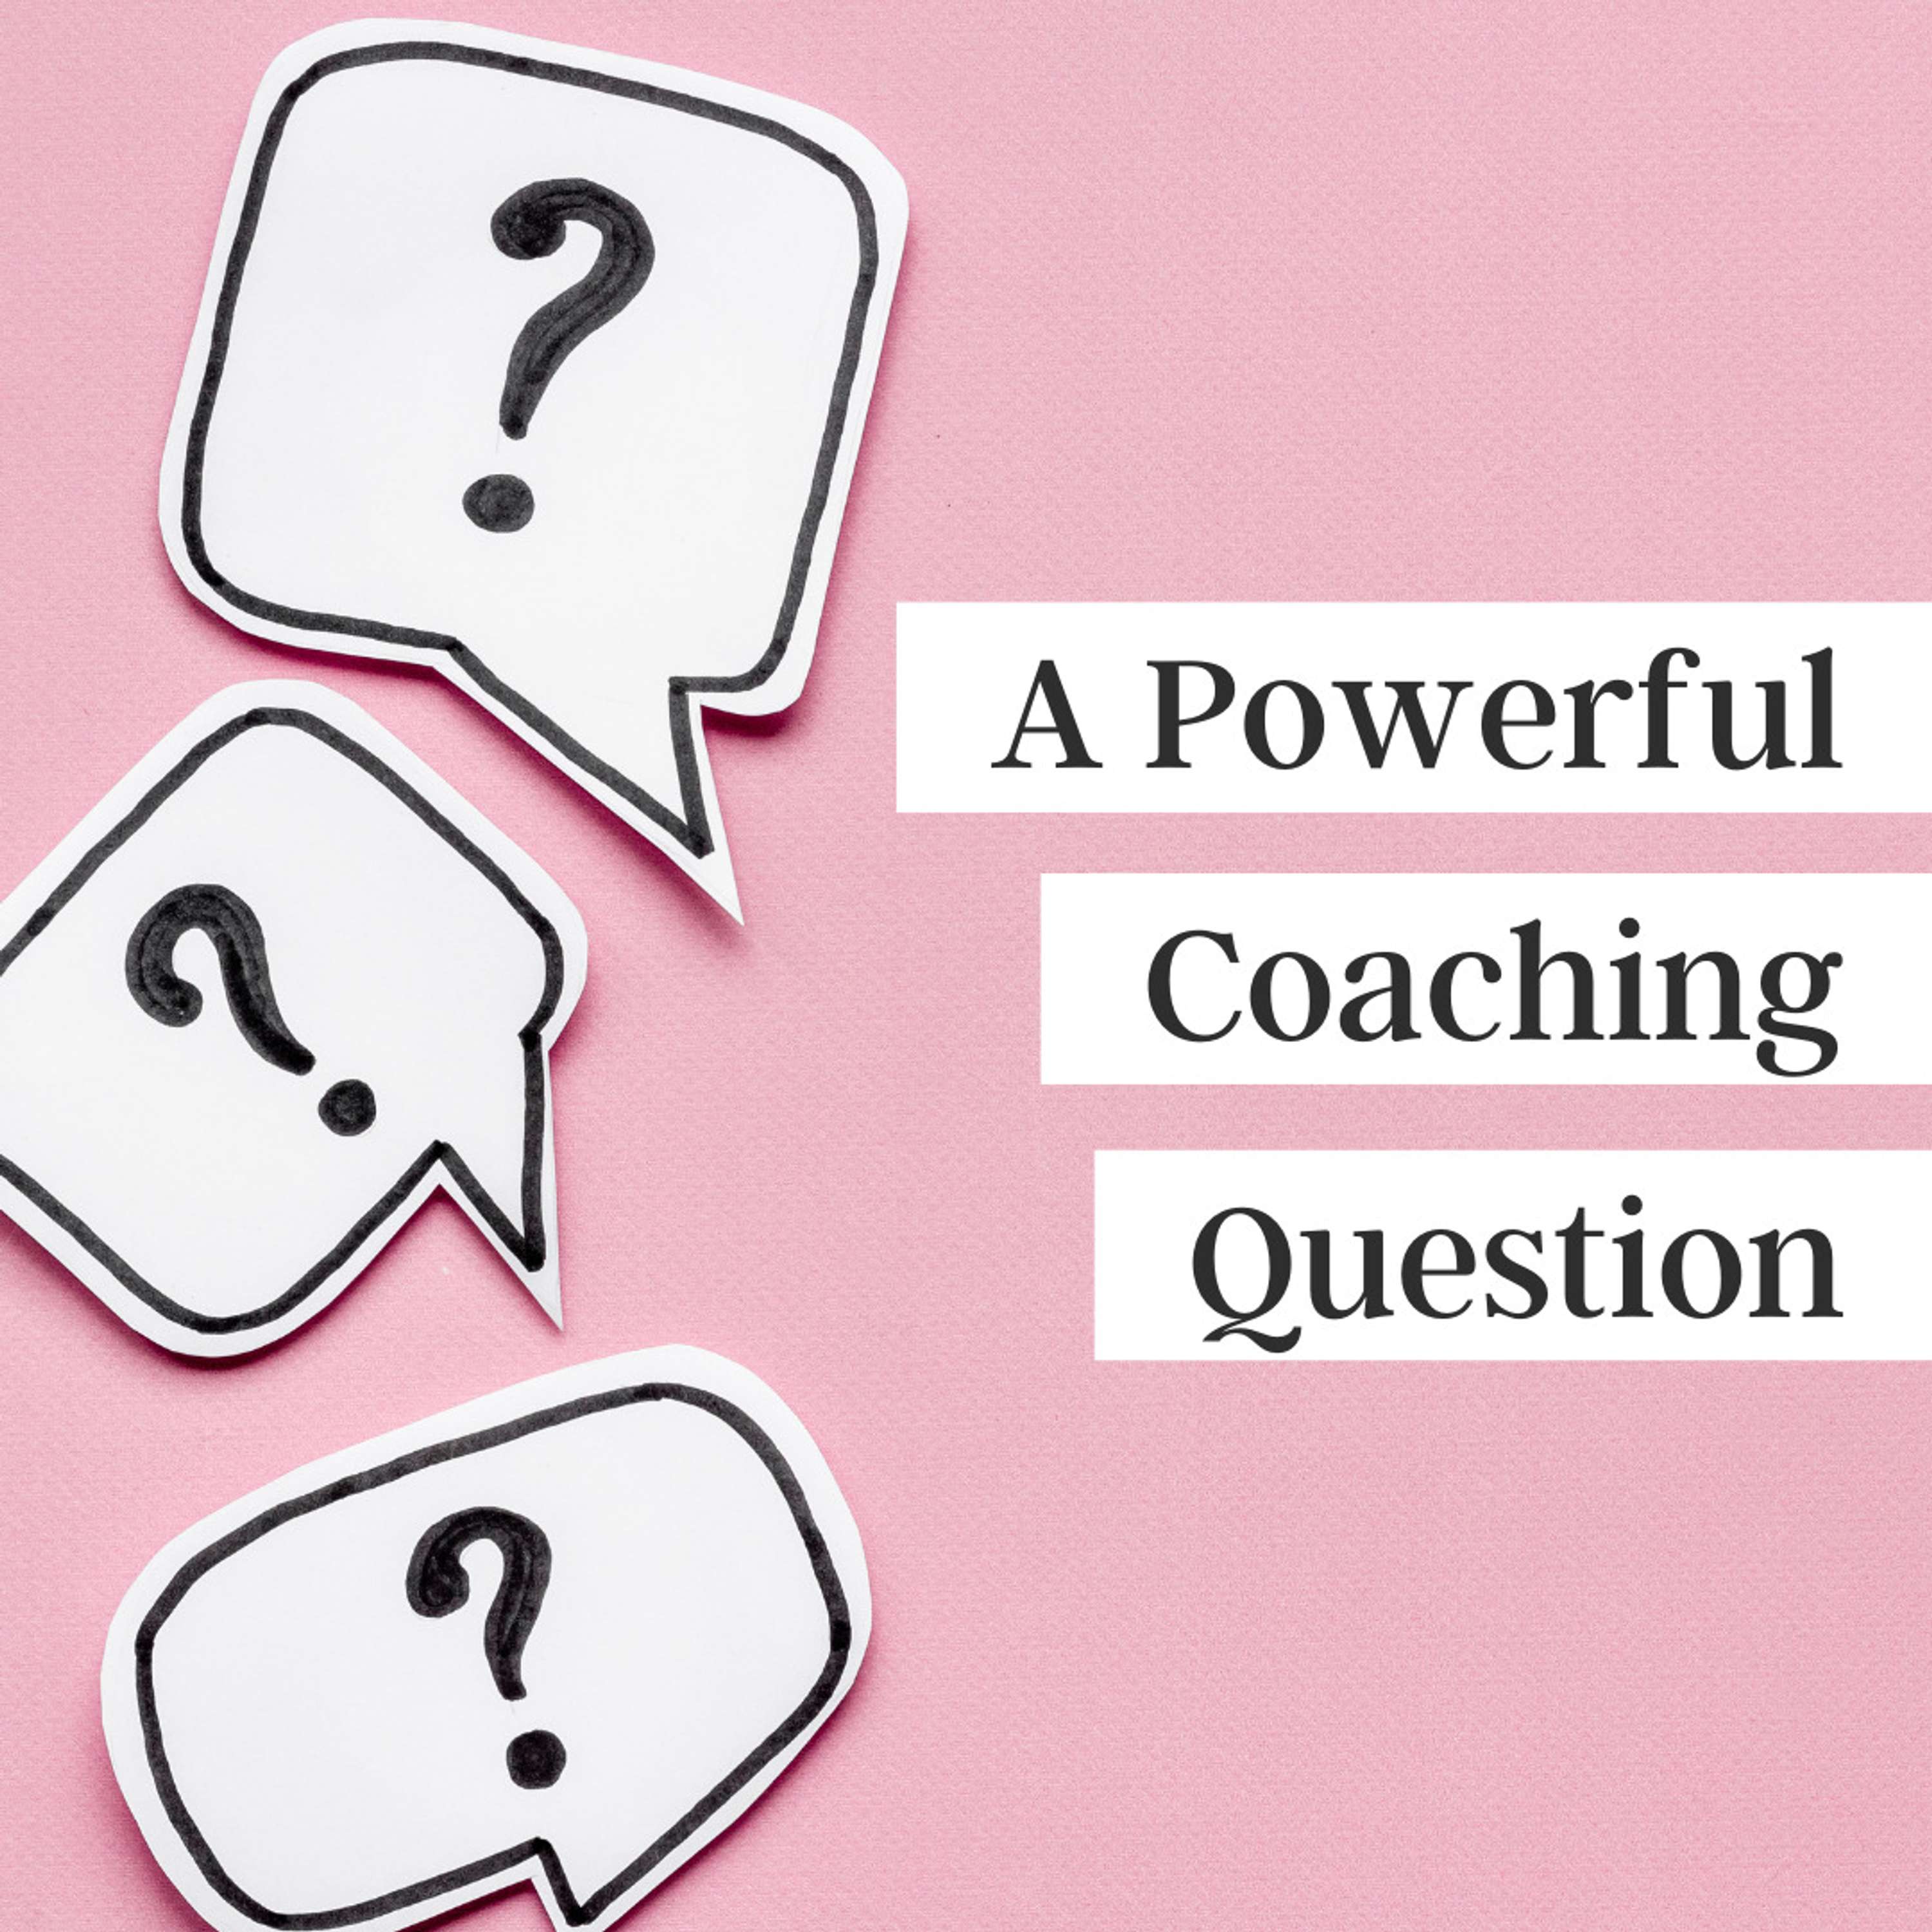 A Powerful Coaching Question